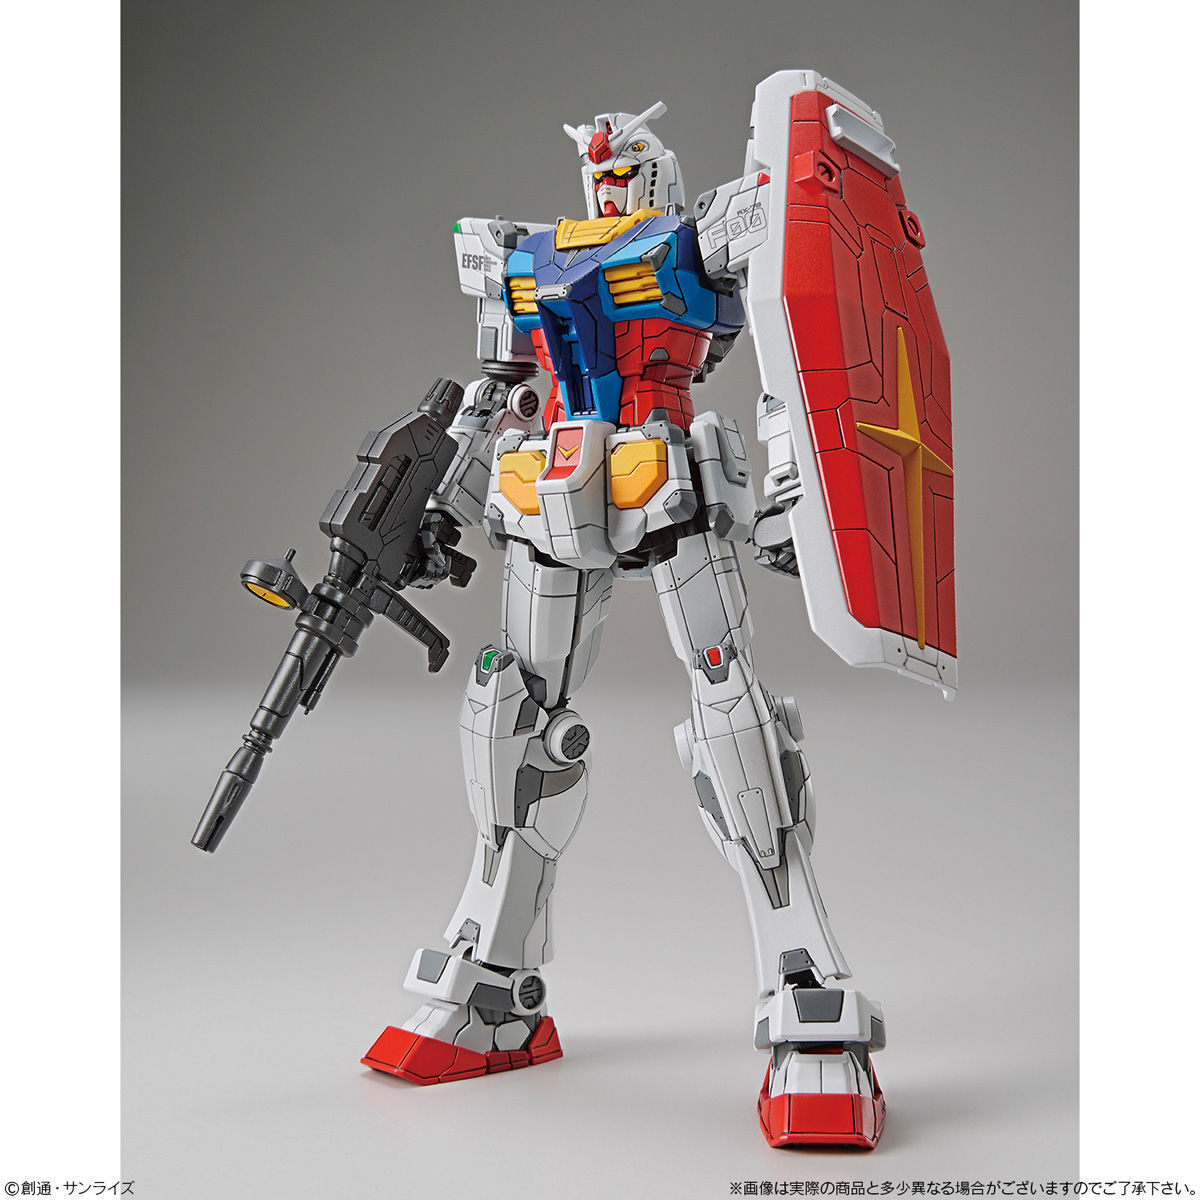 1/144 Scale Model RX-78F00 Gundam